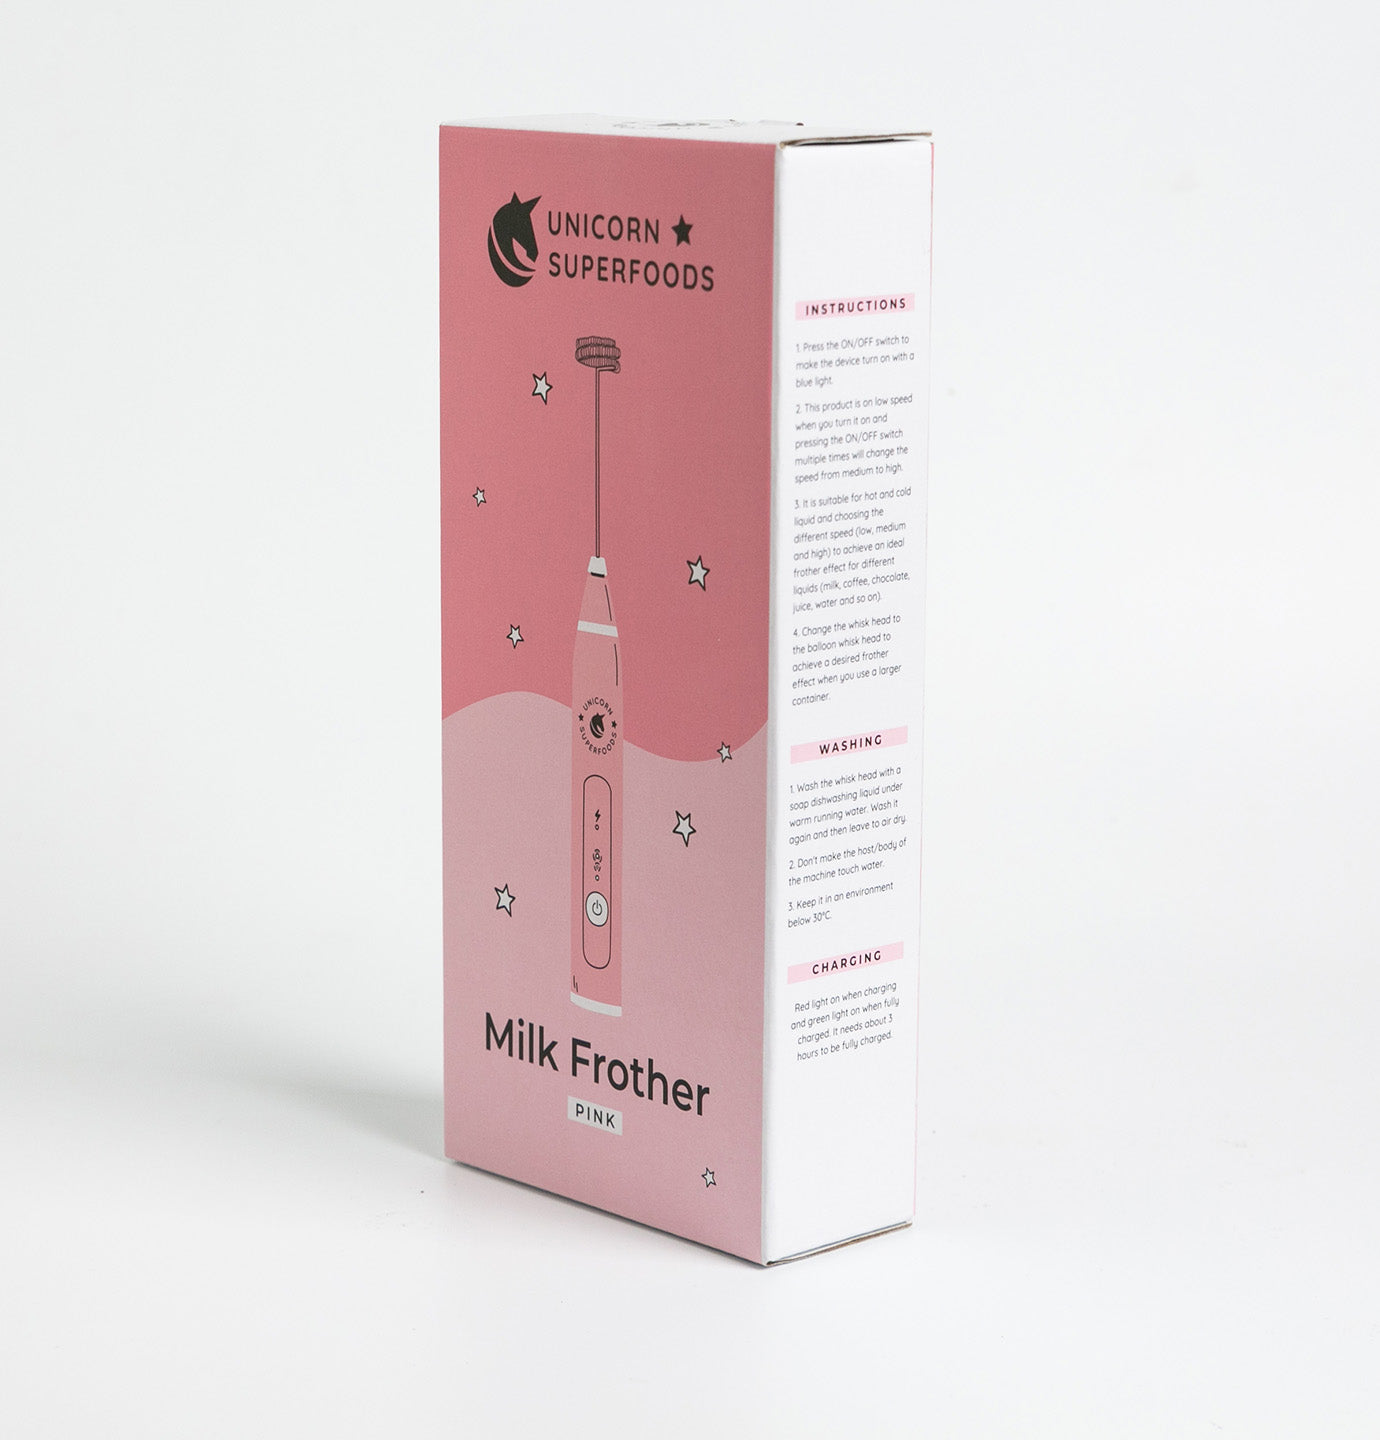 Christmas Pink Electric Milk Frother Handheld Foam Maker Usb Egg